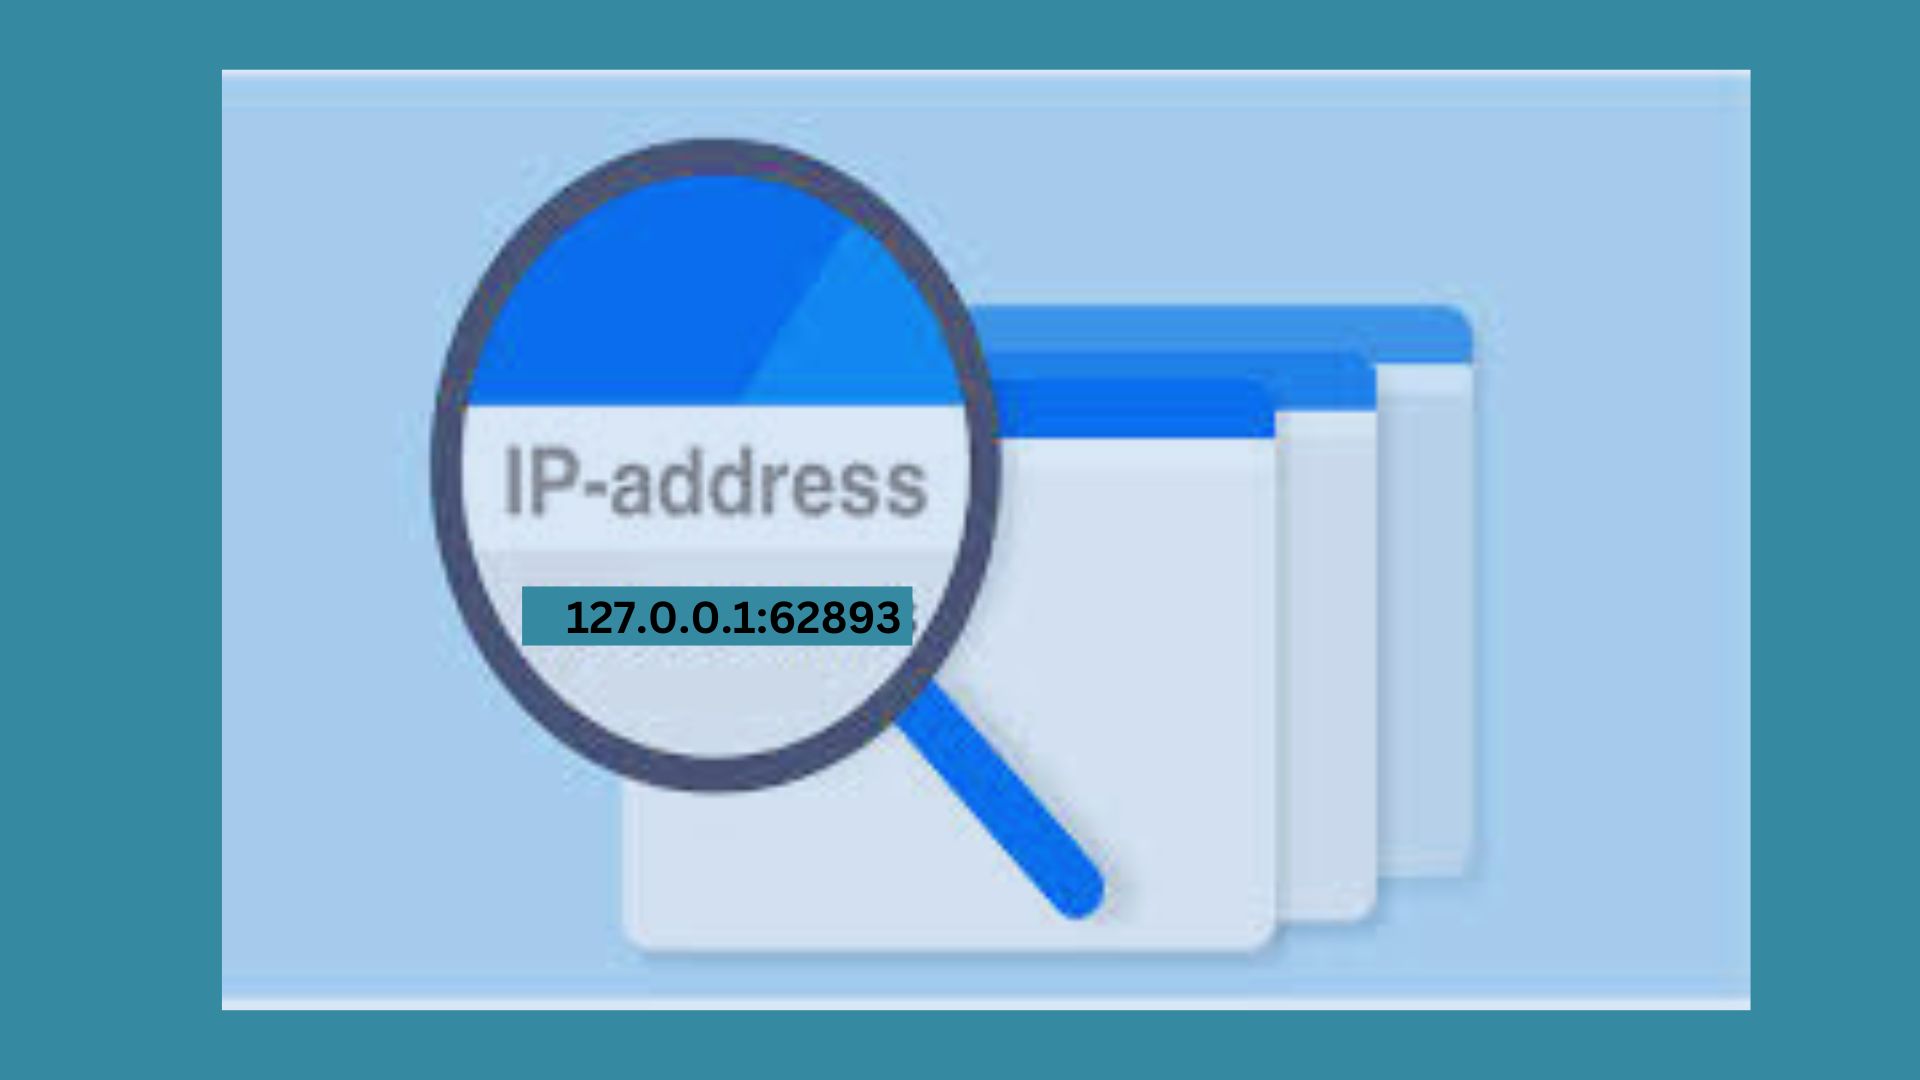 Exploring Localhost IP: 127.0.0.1 and Port 62893